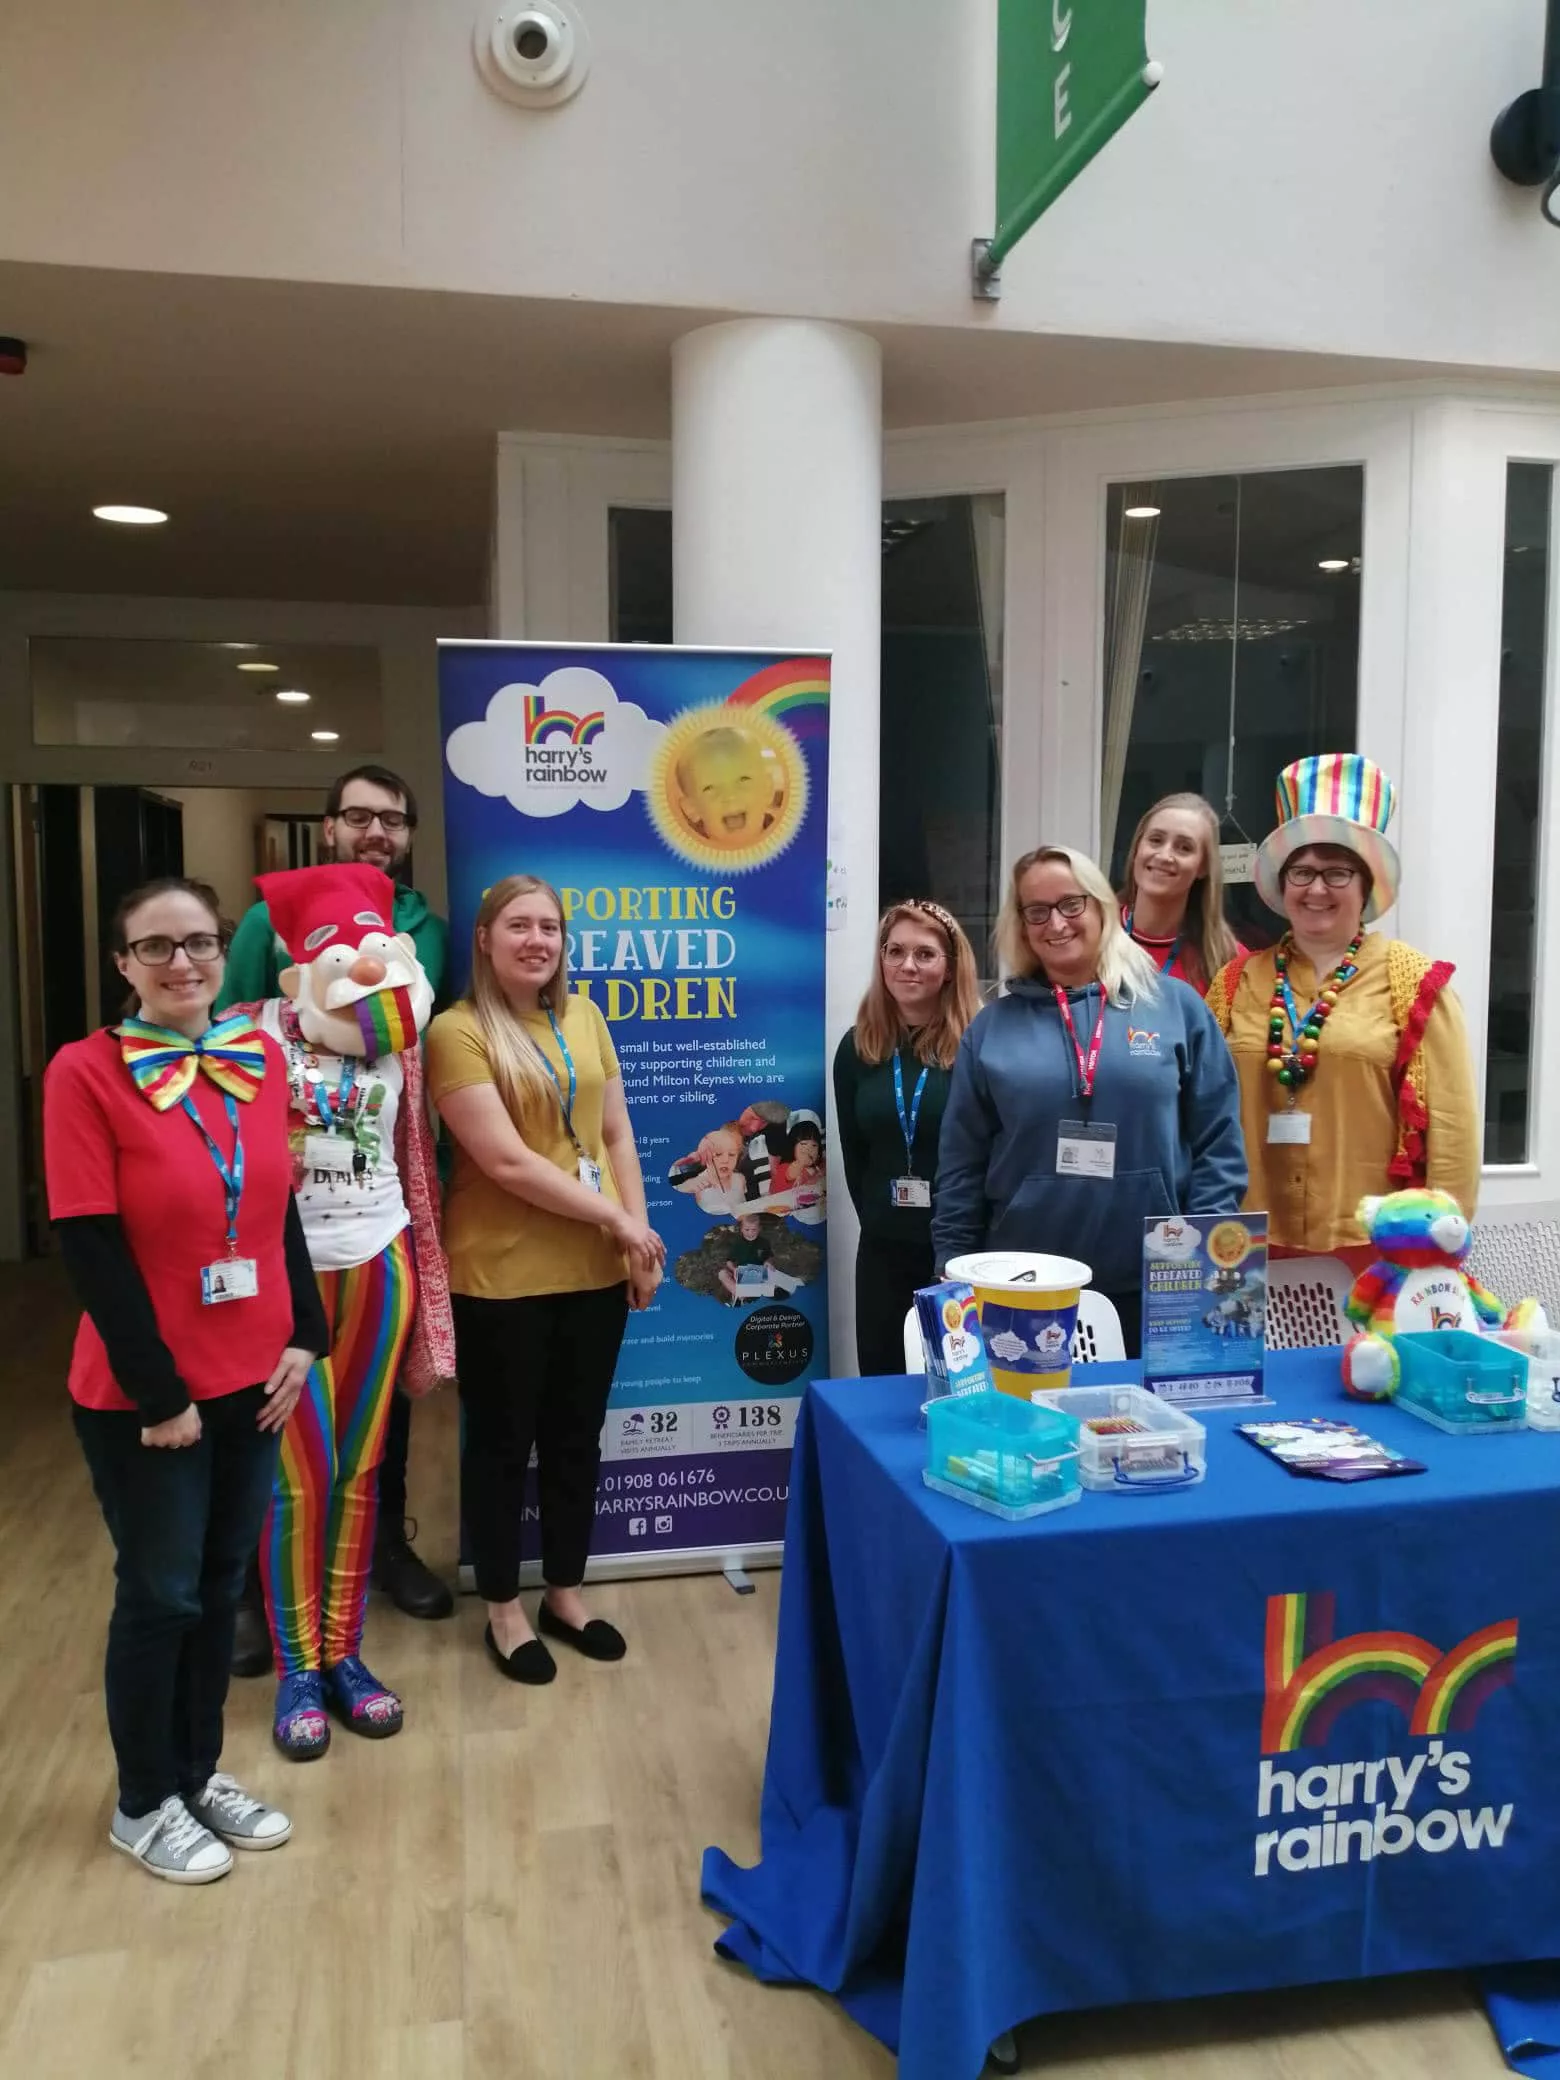 MK College celebrates raising £1000 for Harry’s Rainbow